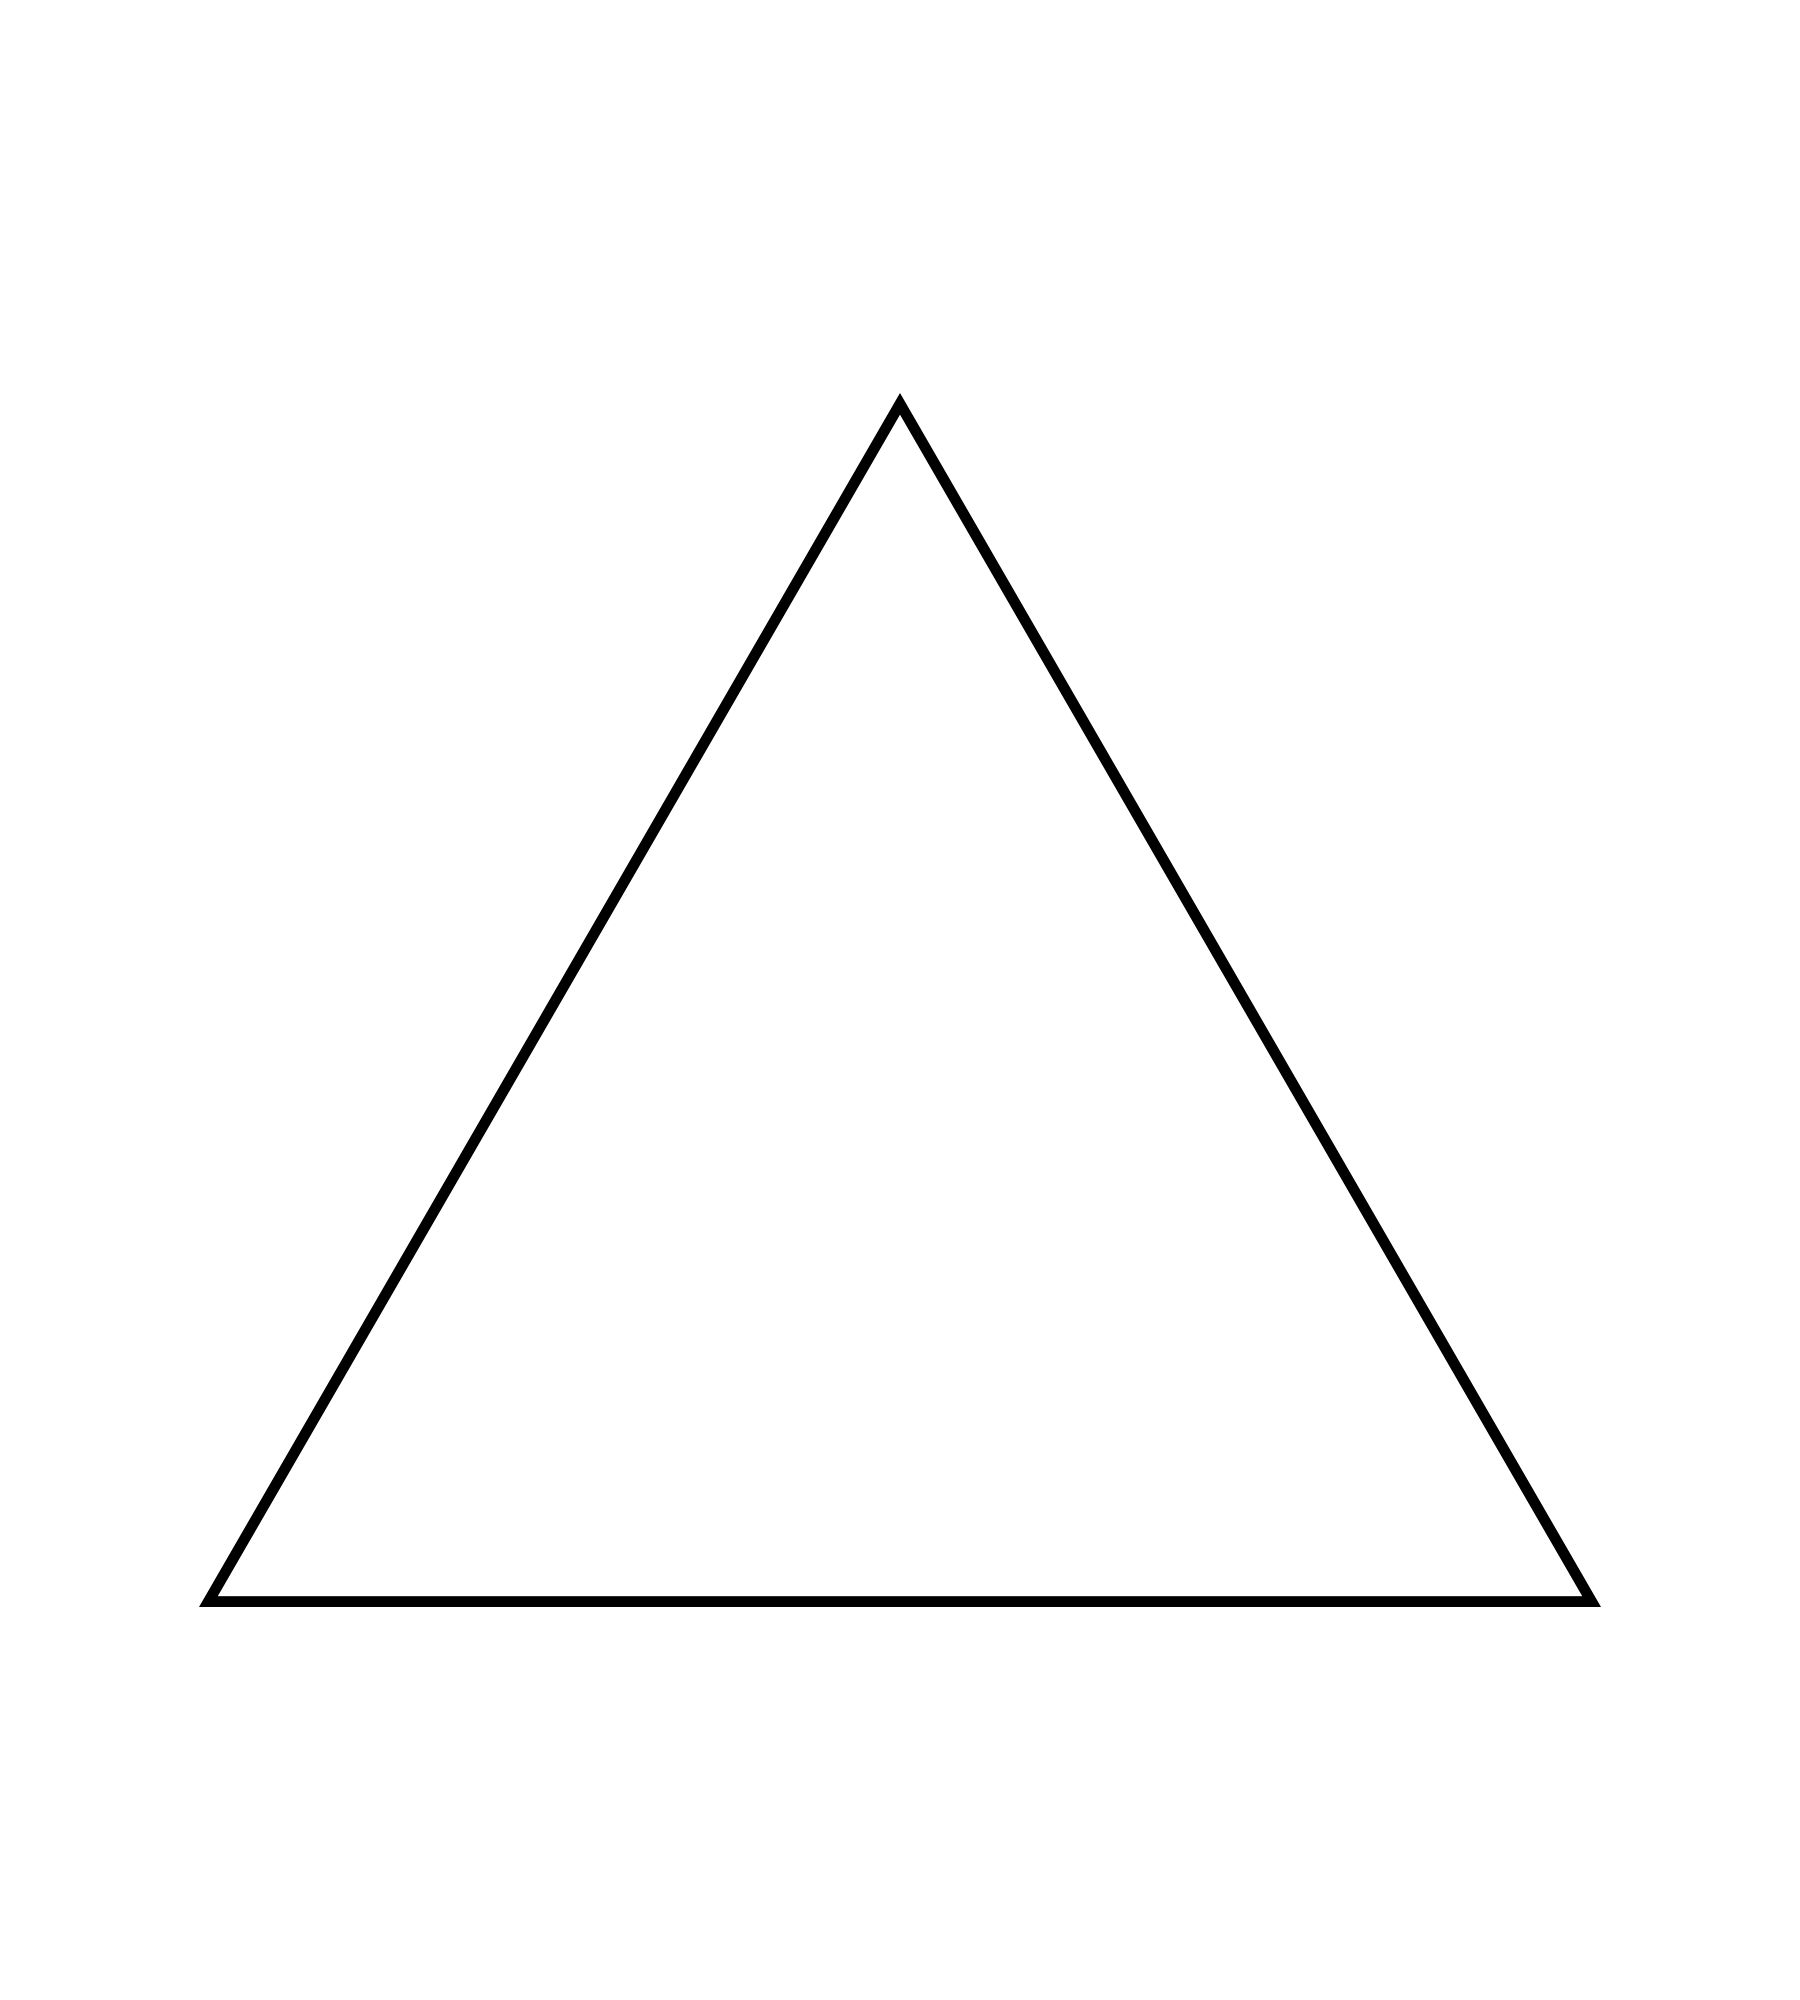 Figure geometriche - Figura geometrica piana - Triangolo equilatero